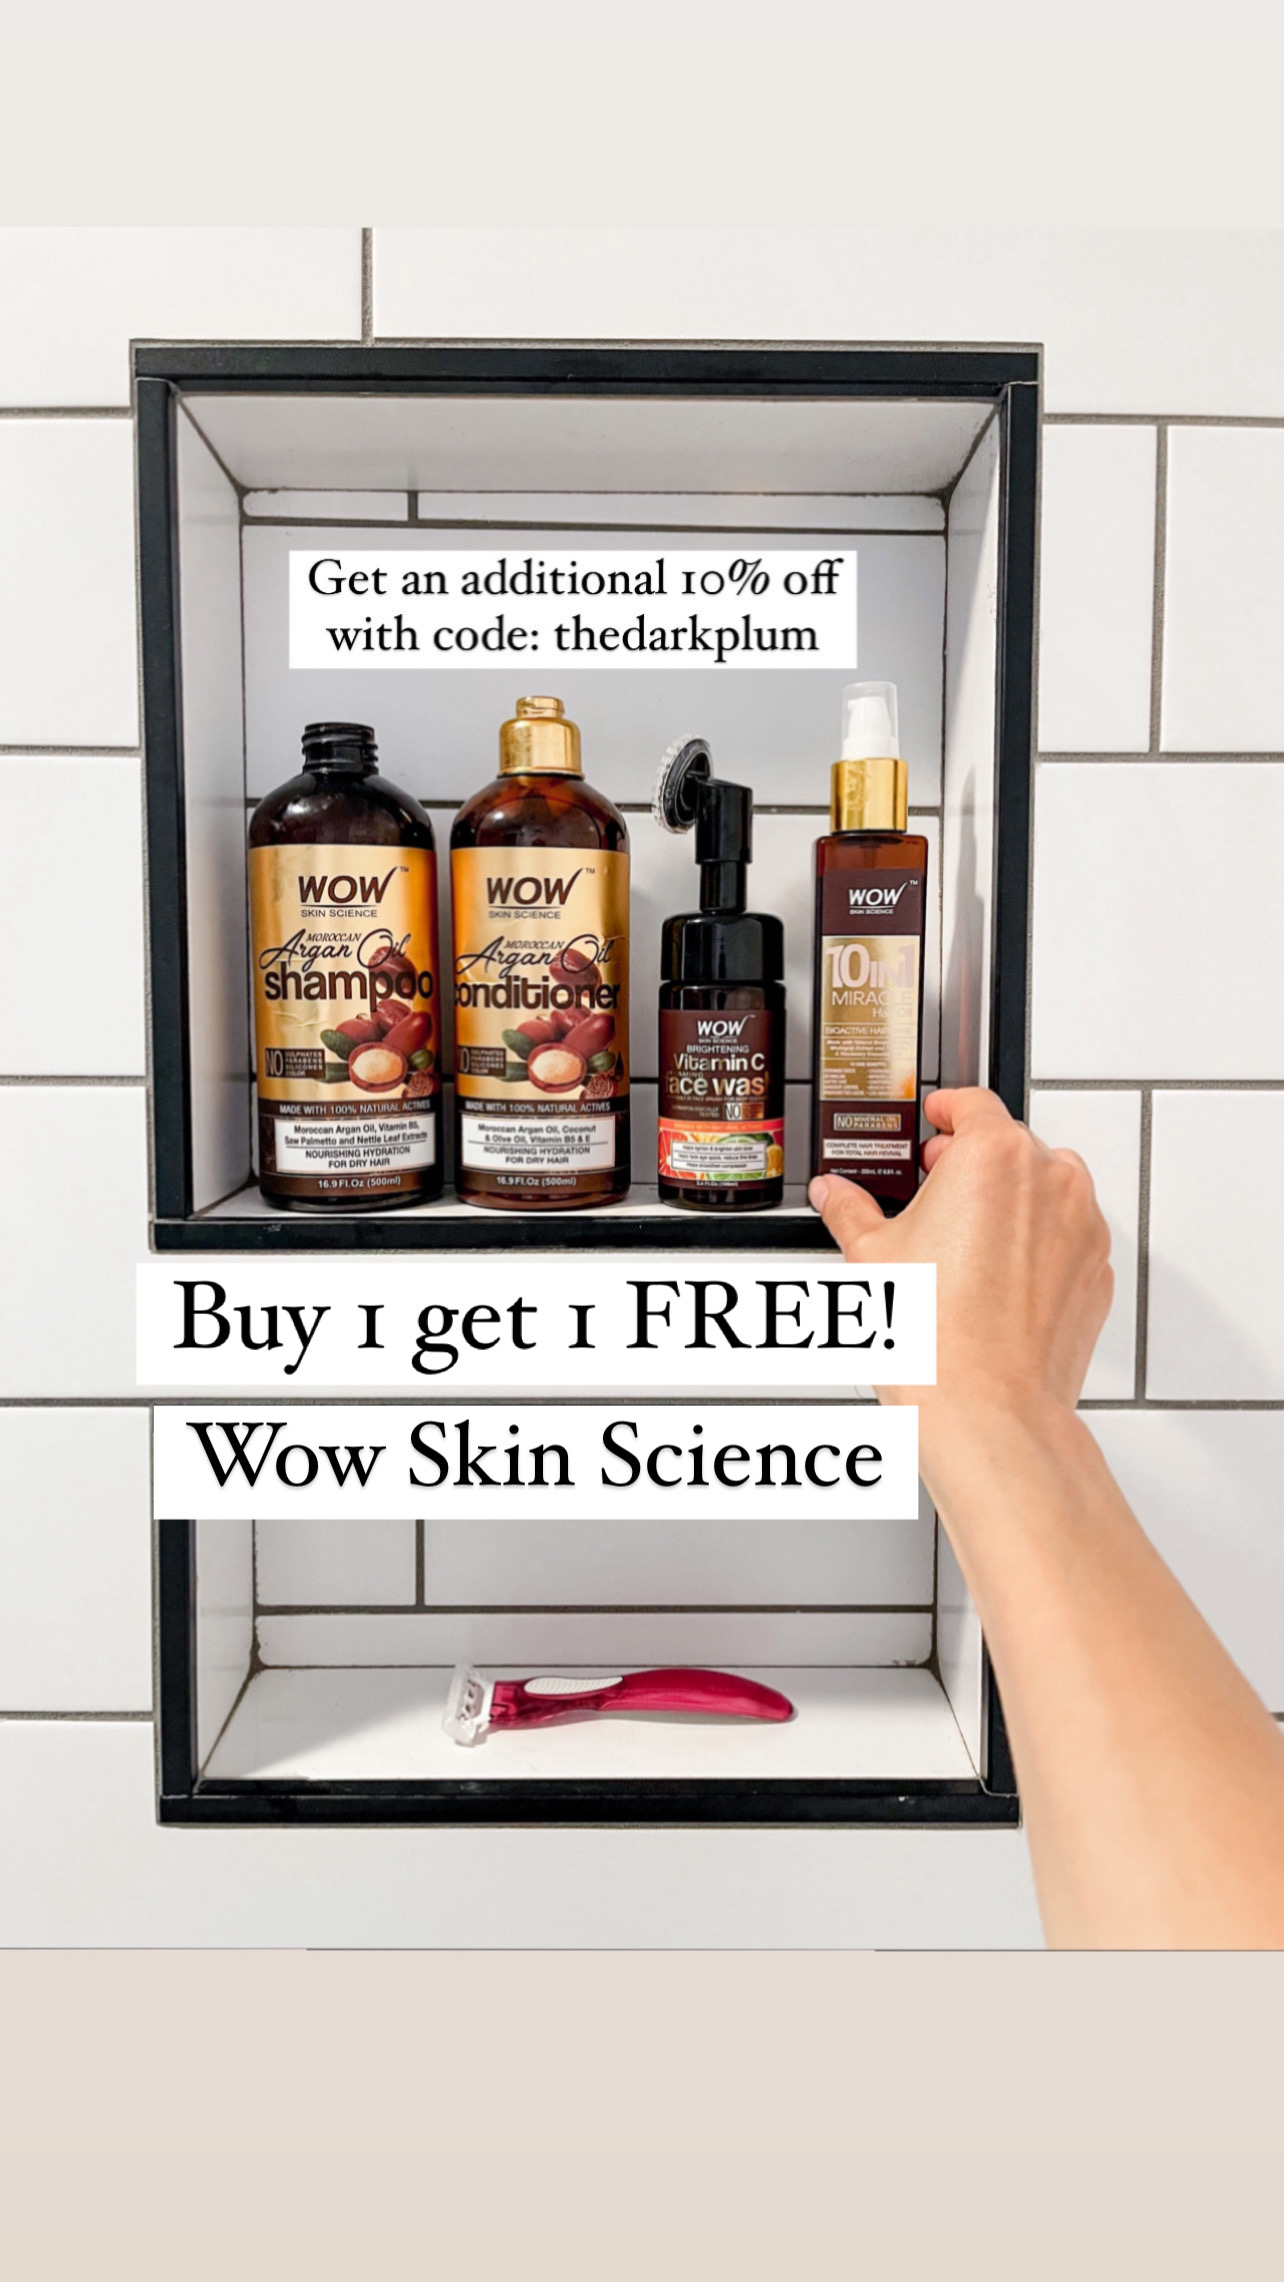 Wow Skin Science sale 